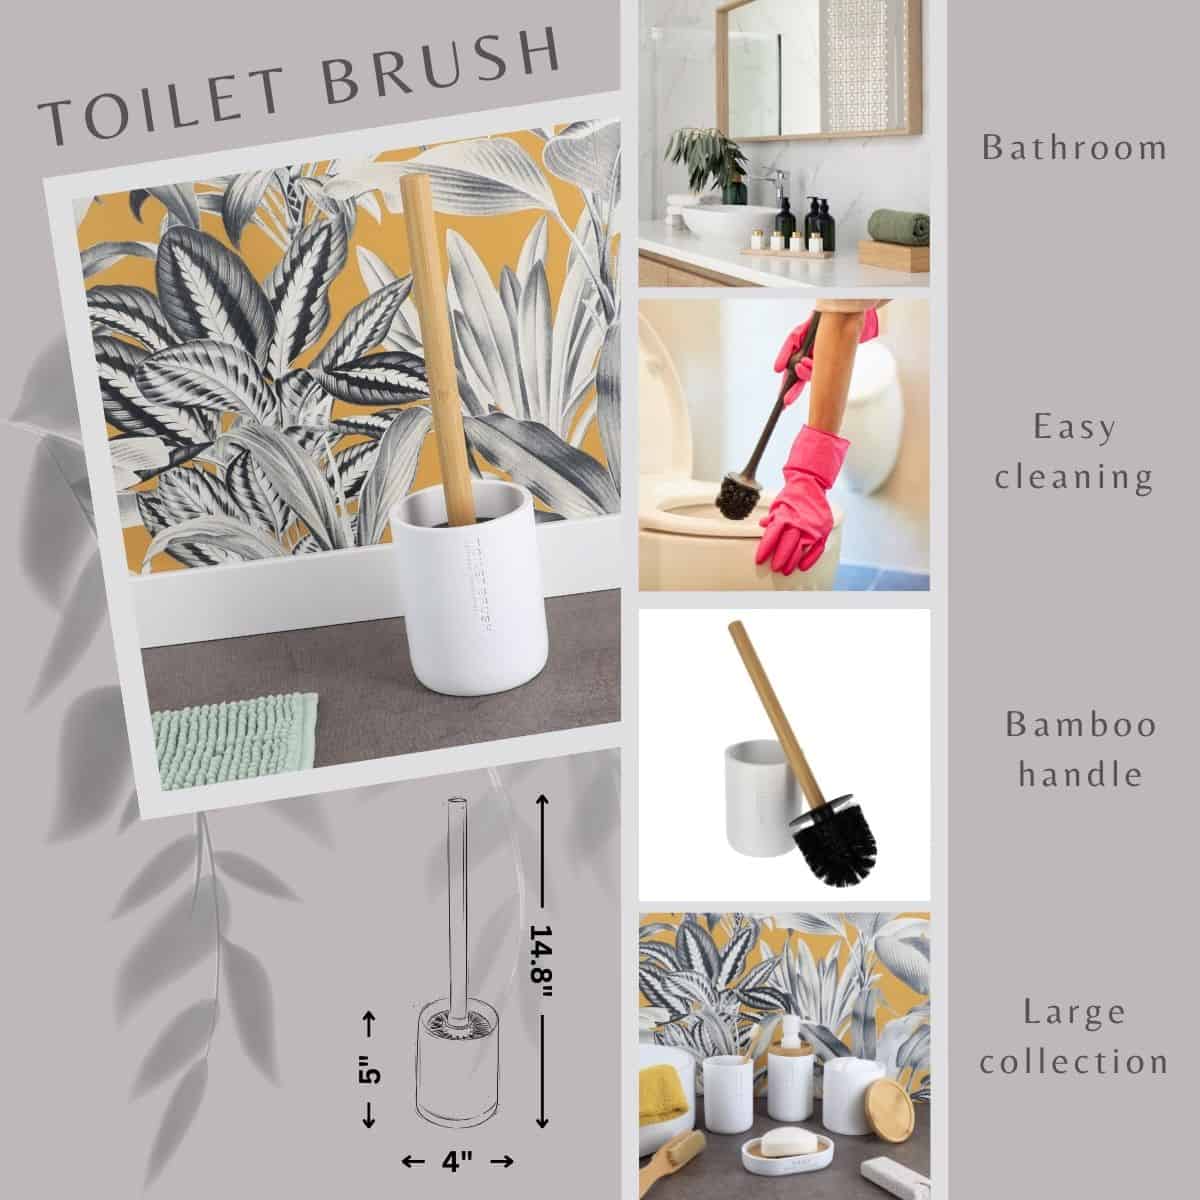 Versatile wooden pearl white toilet brush and holder set for bathroom restroom easy cleaning